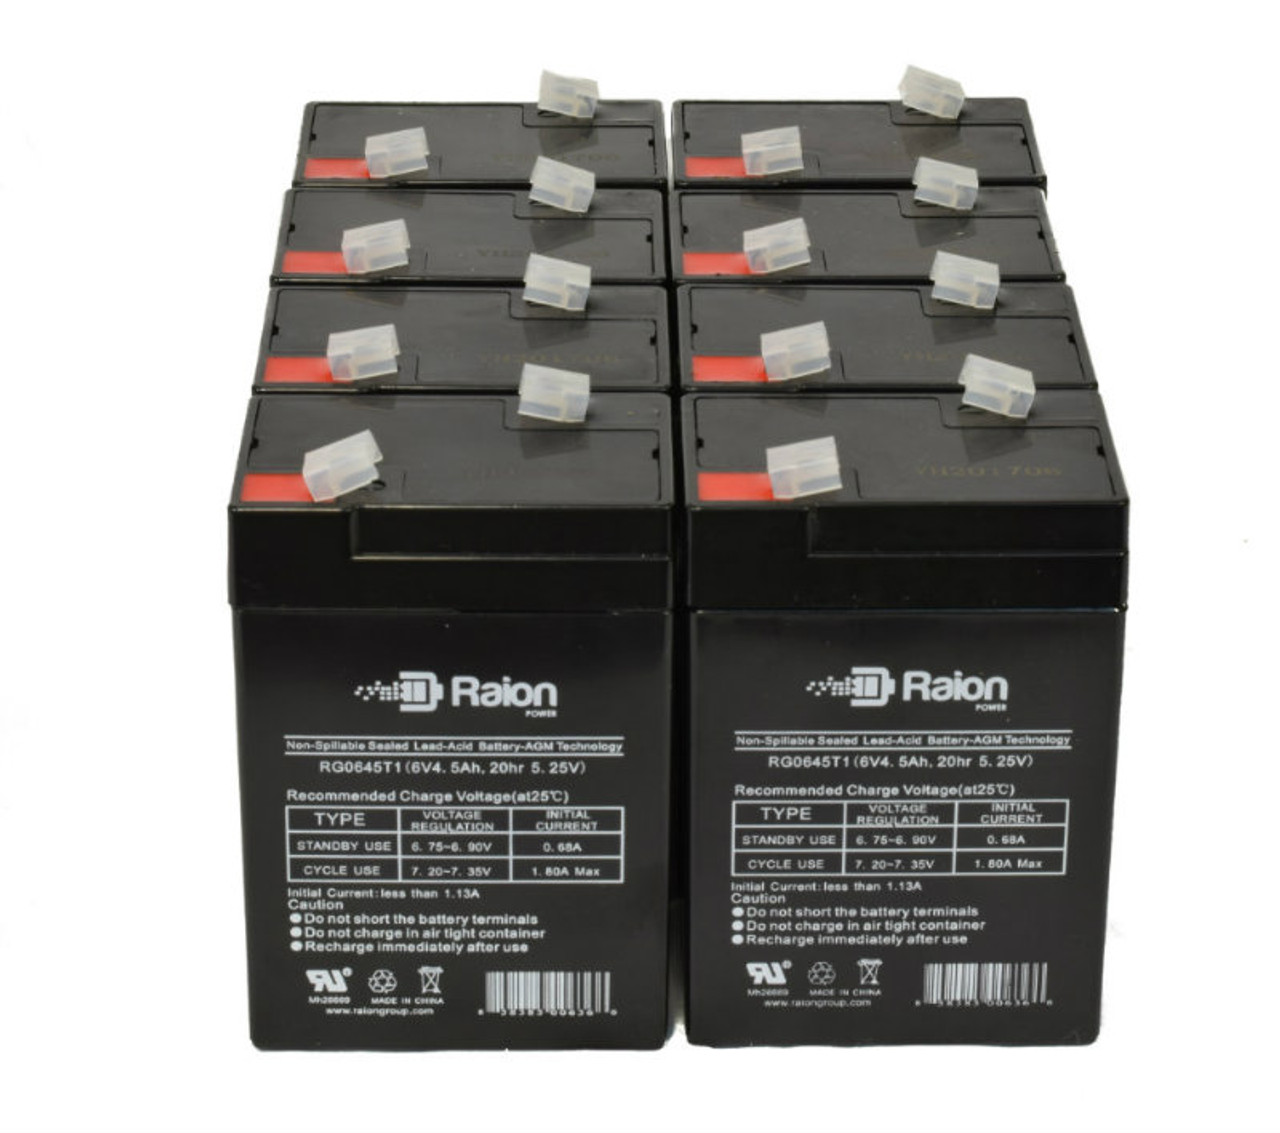 Raion Power 6V 4.5Ah Replacement Emergency Light Battery for Dual-Lite CVT3GB - 8 Pack